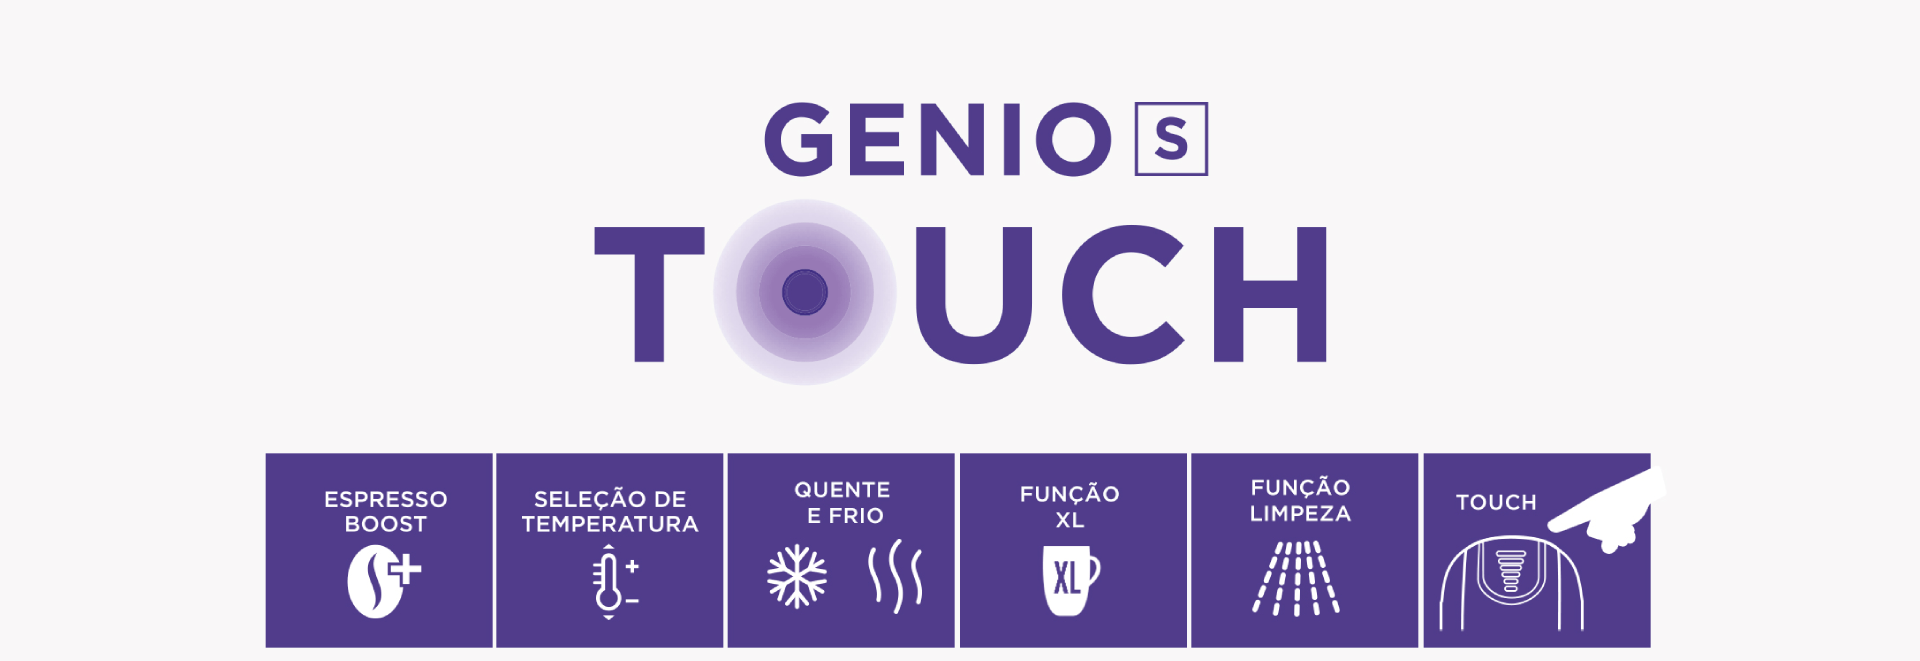 Genio S Touch